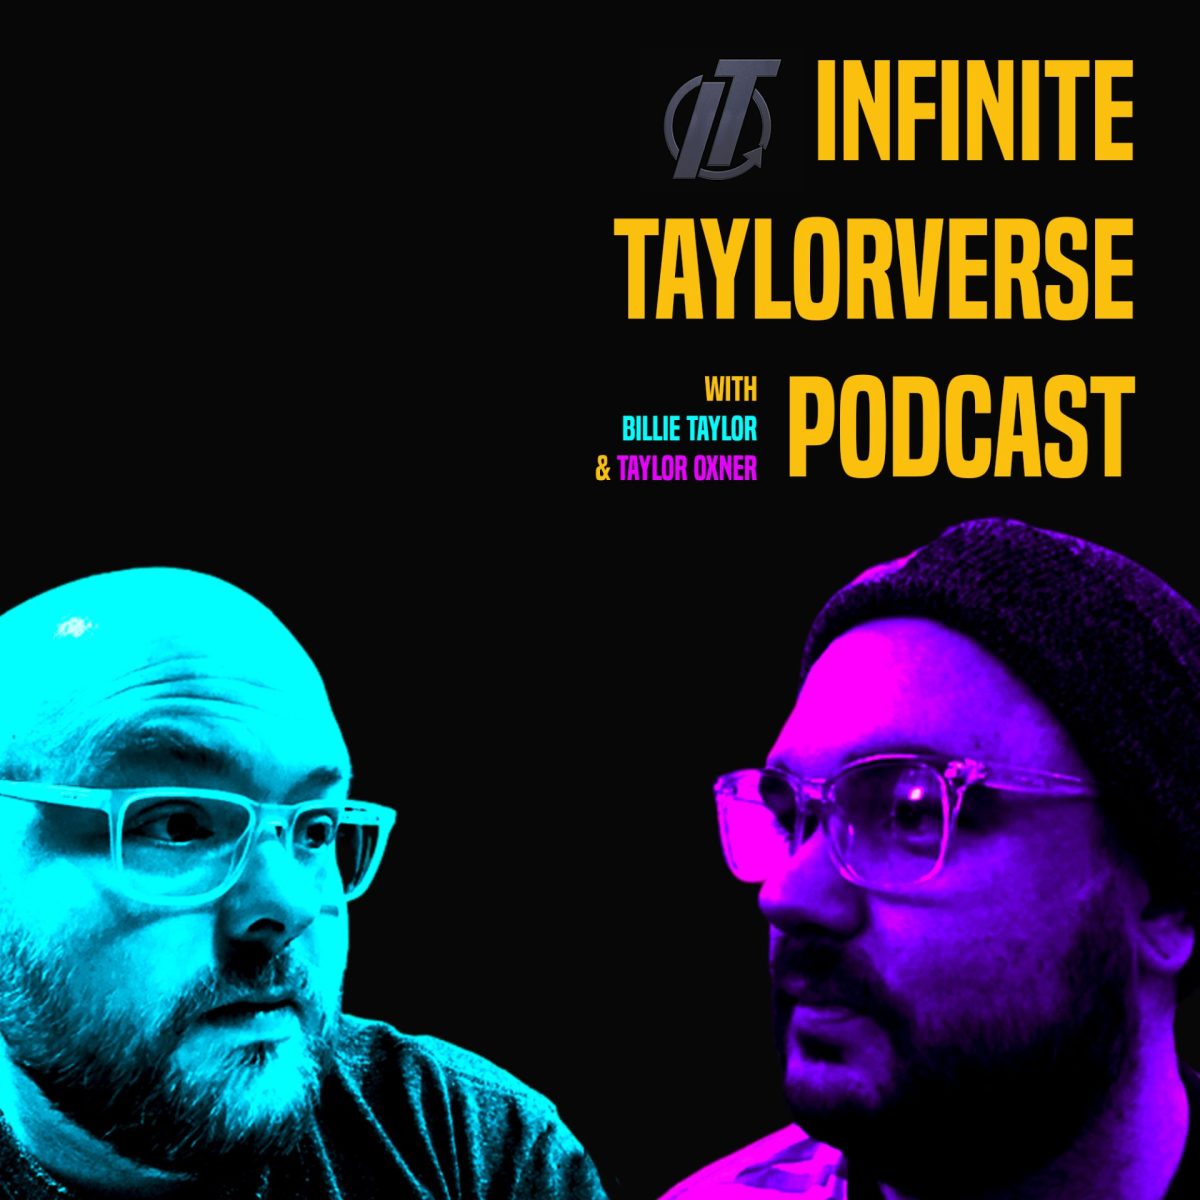 Photo Credit: The Infinite Taylorverse Podcast